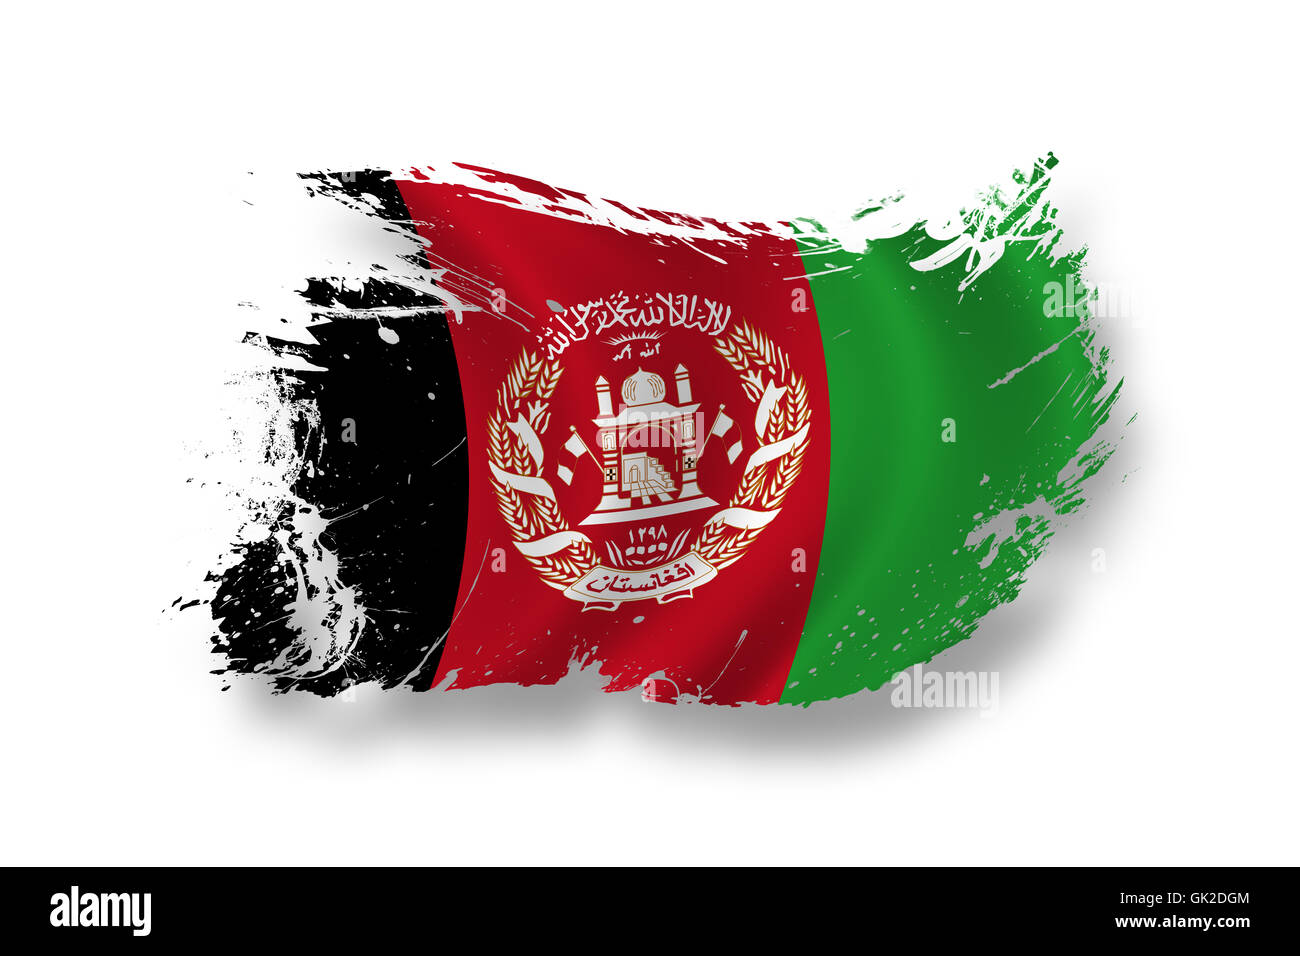 https://c8.alamy.com/comp/GK2DGM/flag-of-afghanistan-GK2DGM.jpg